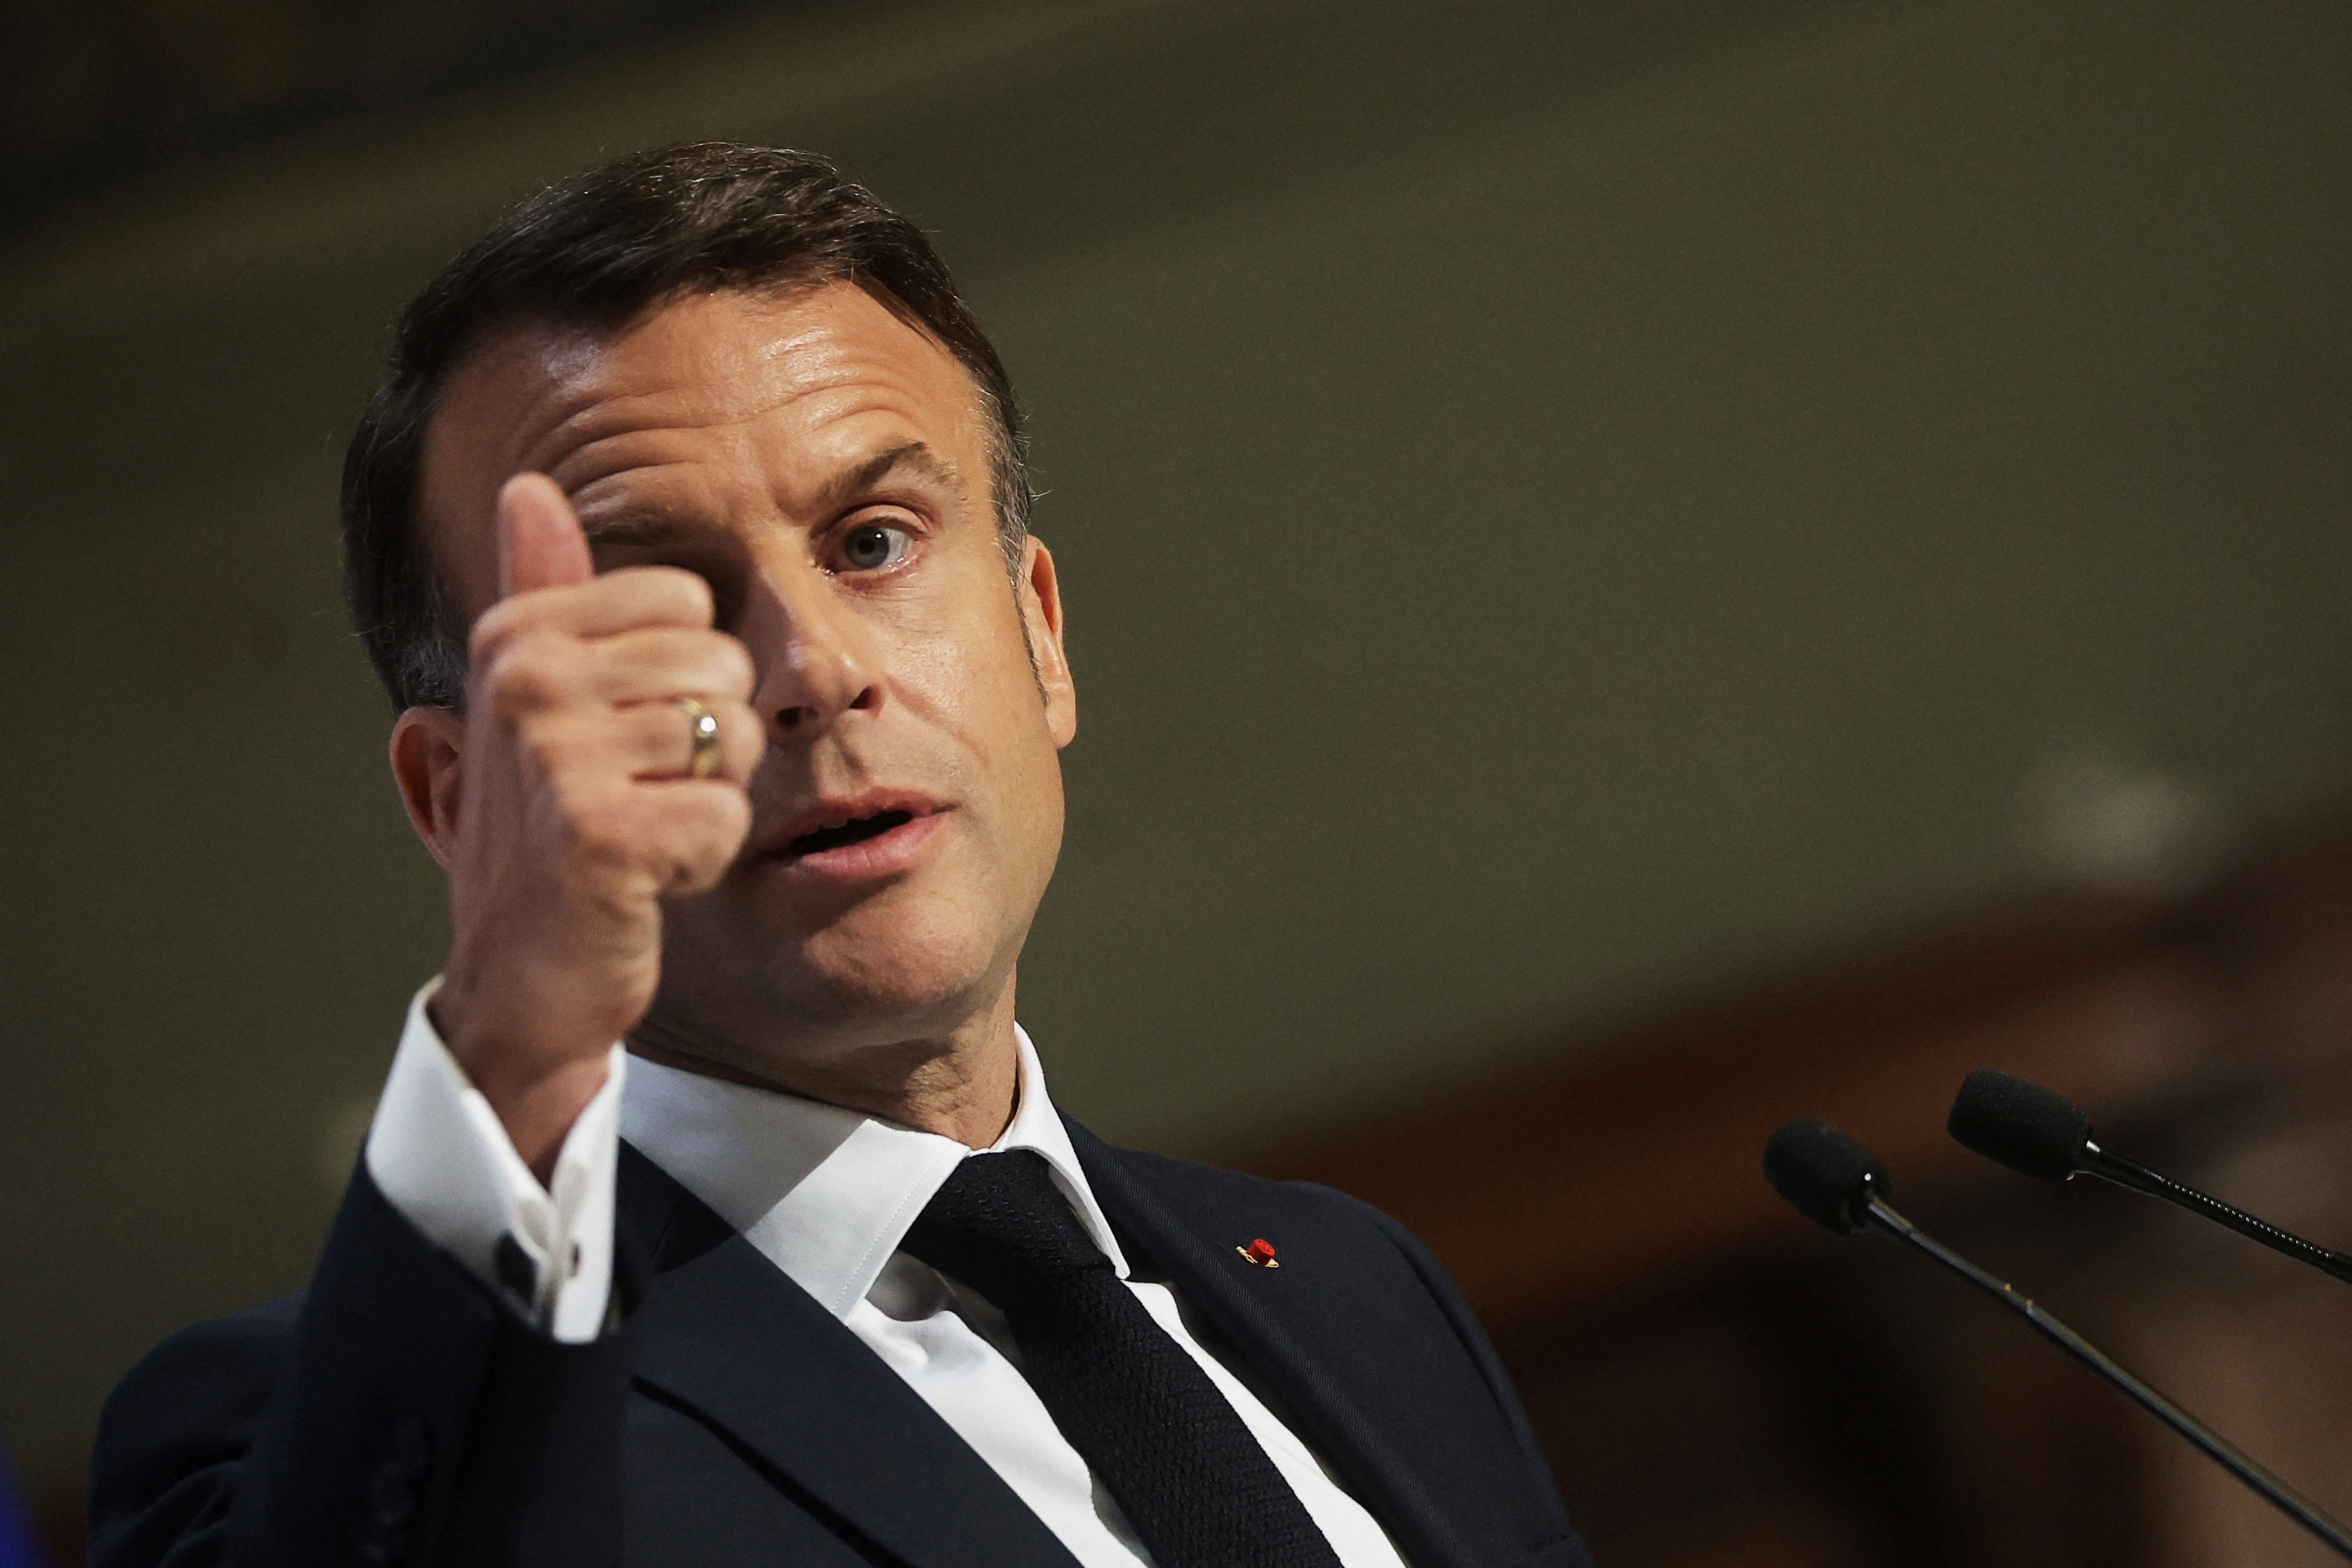 Macron-Rede im Wortlaut: "Europa kann an sich selbst sterben"